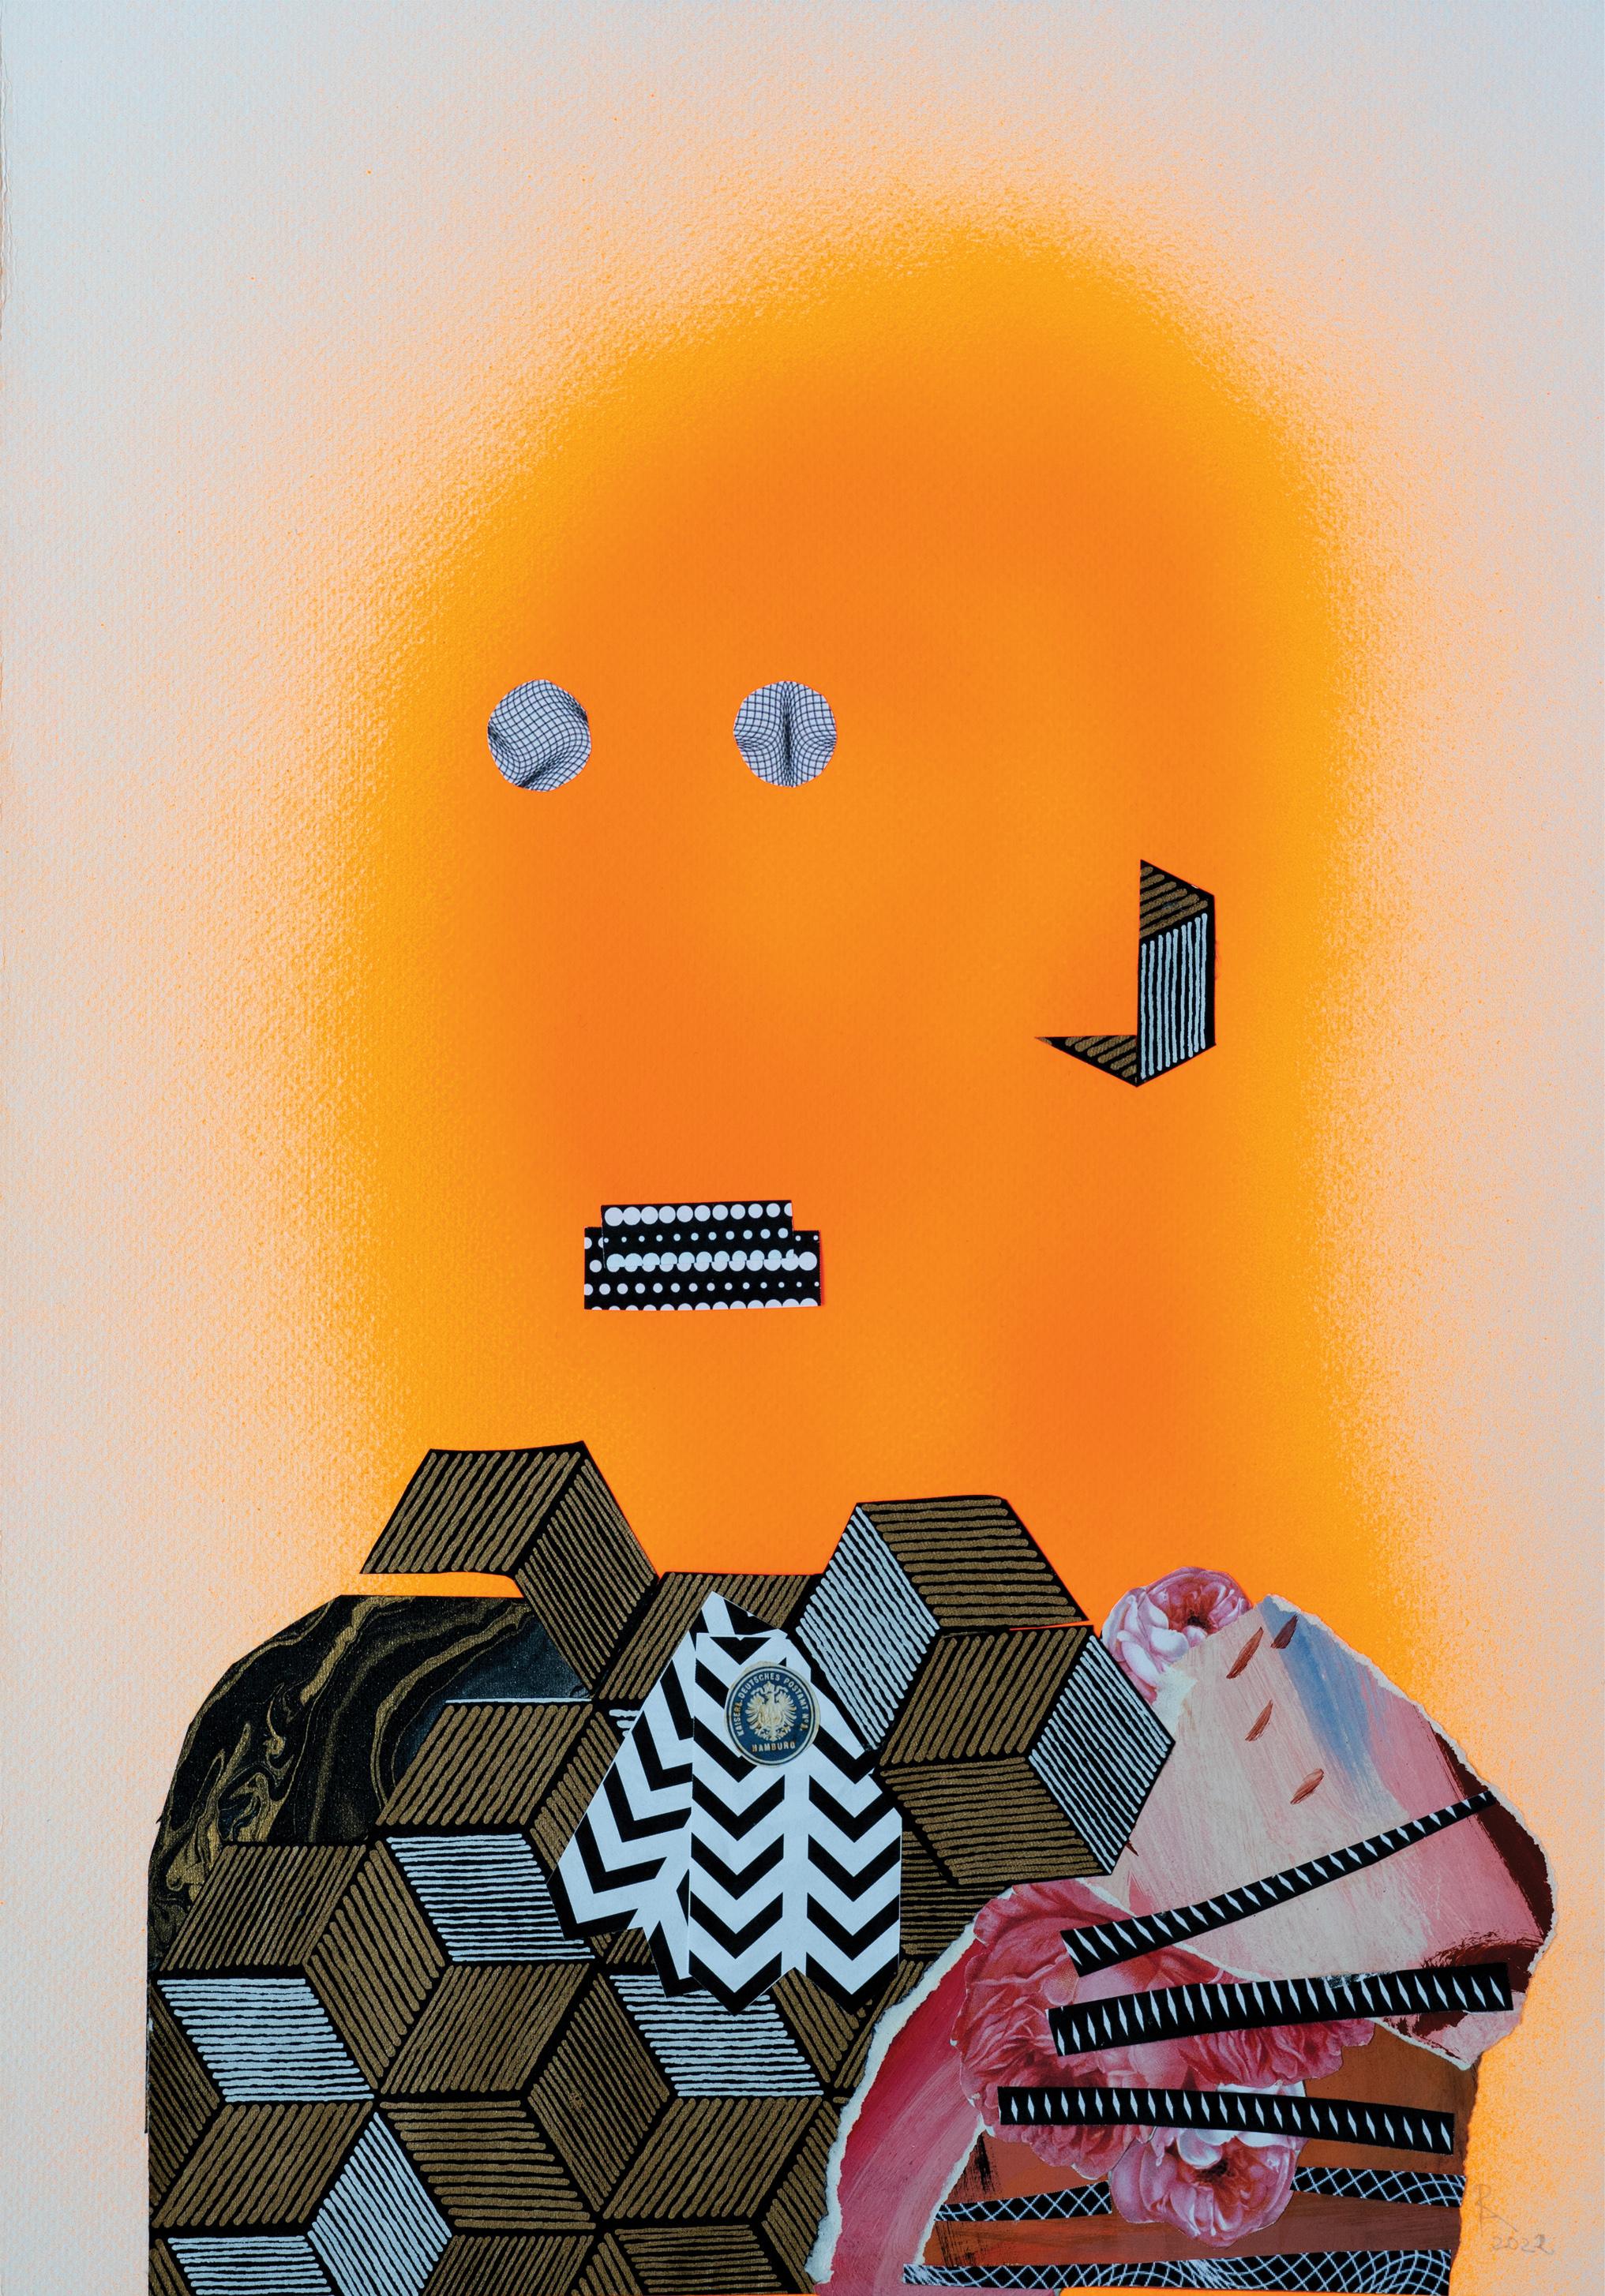 The Headless Soldier - Orange, Paper, Contemporary Art, 21st Century - Mixed Media Art by Raluca Arnăutu